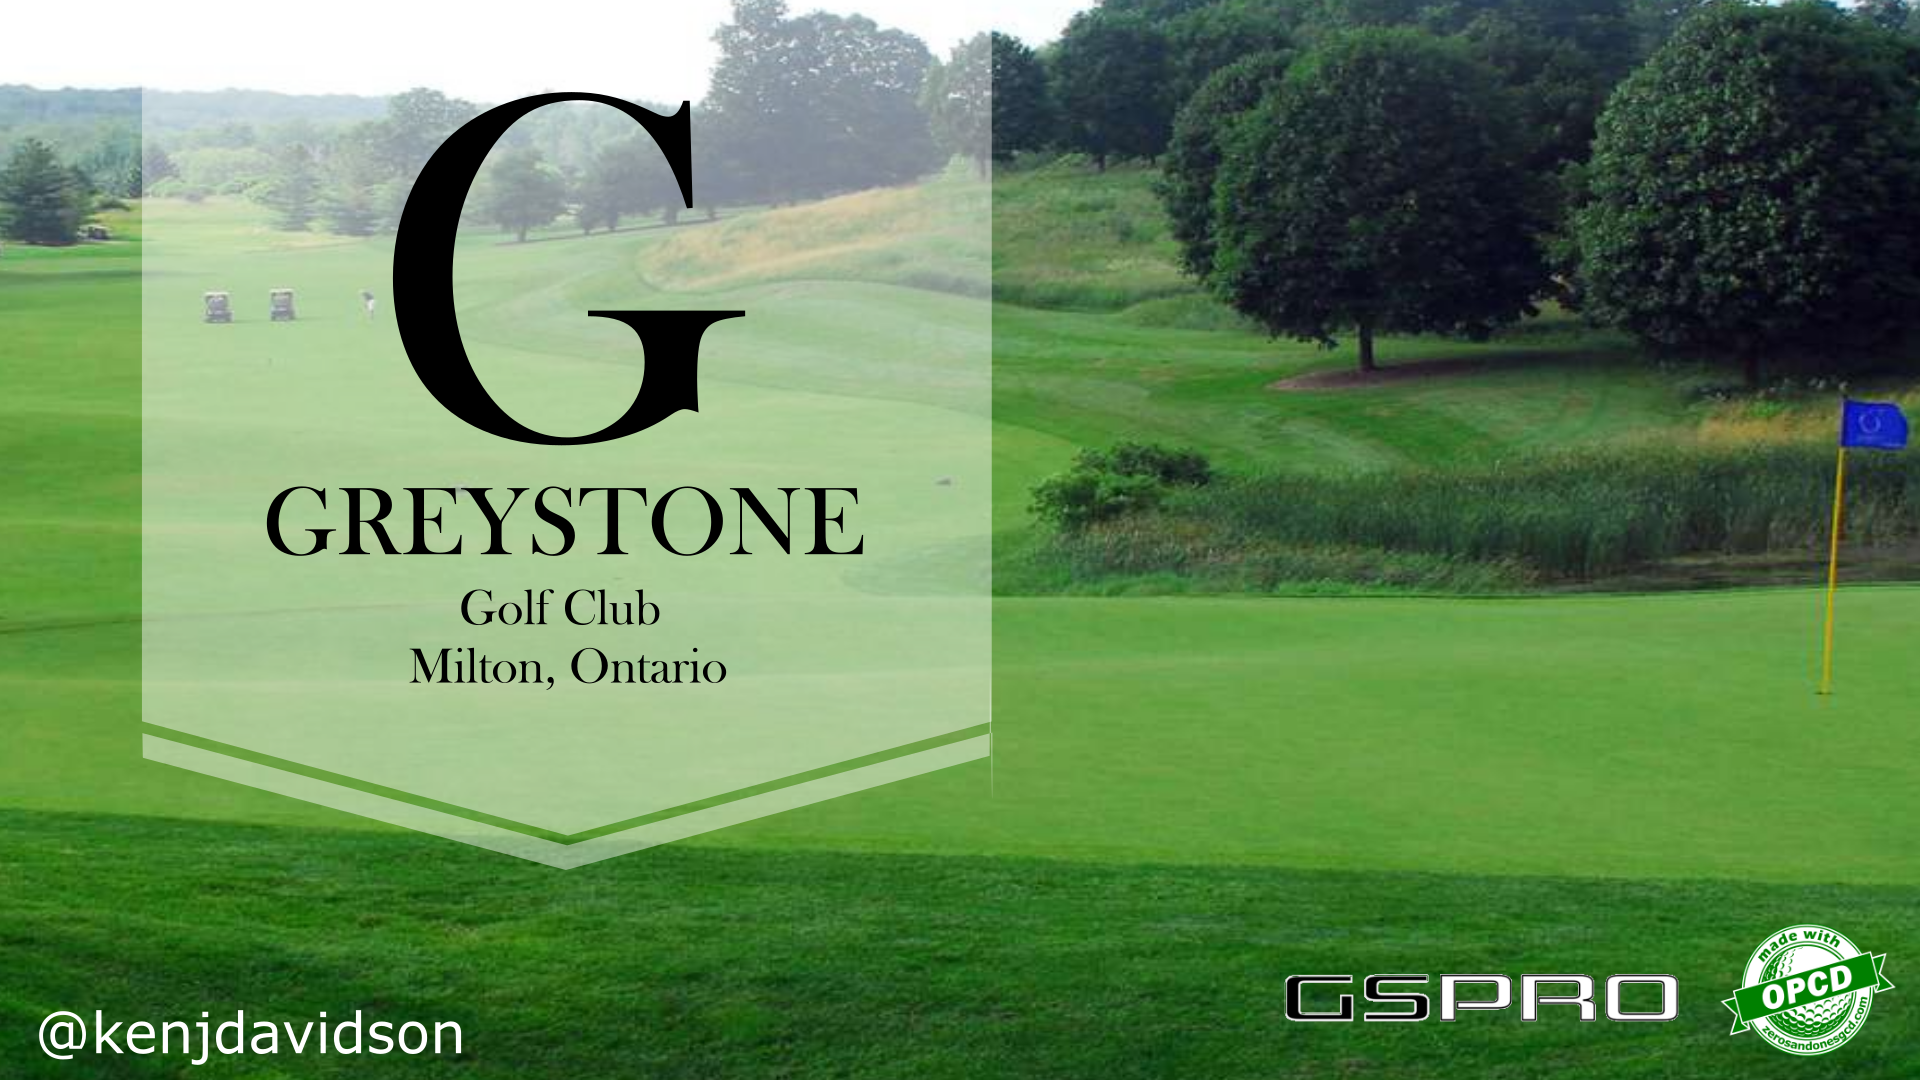 Greystone Golf Club splash image